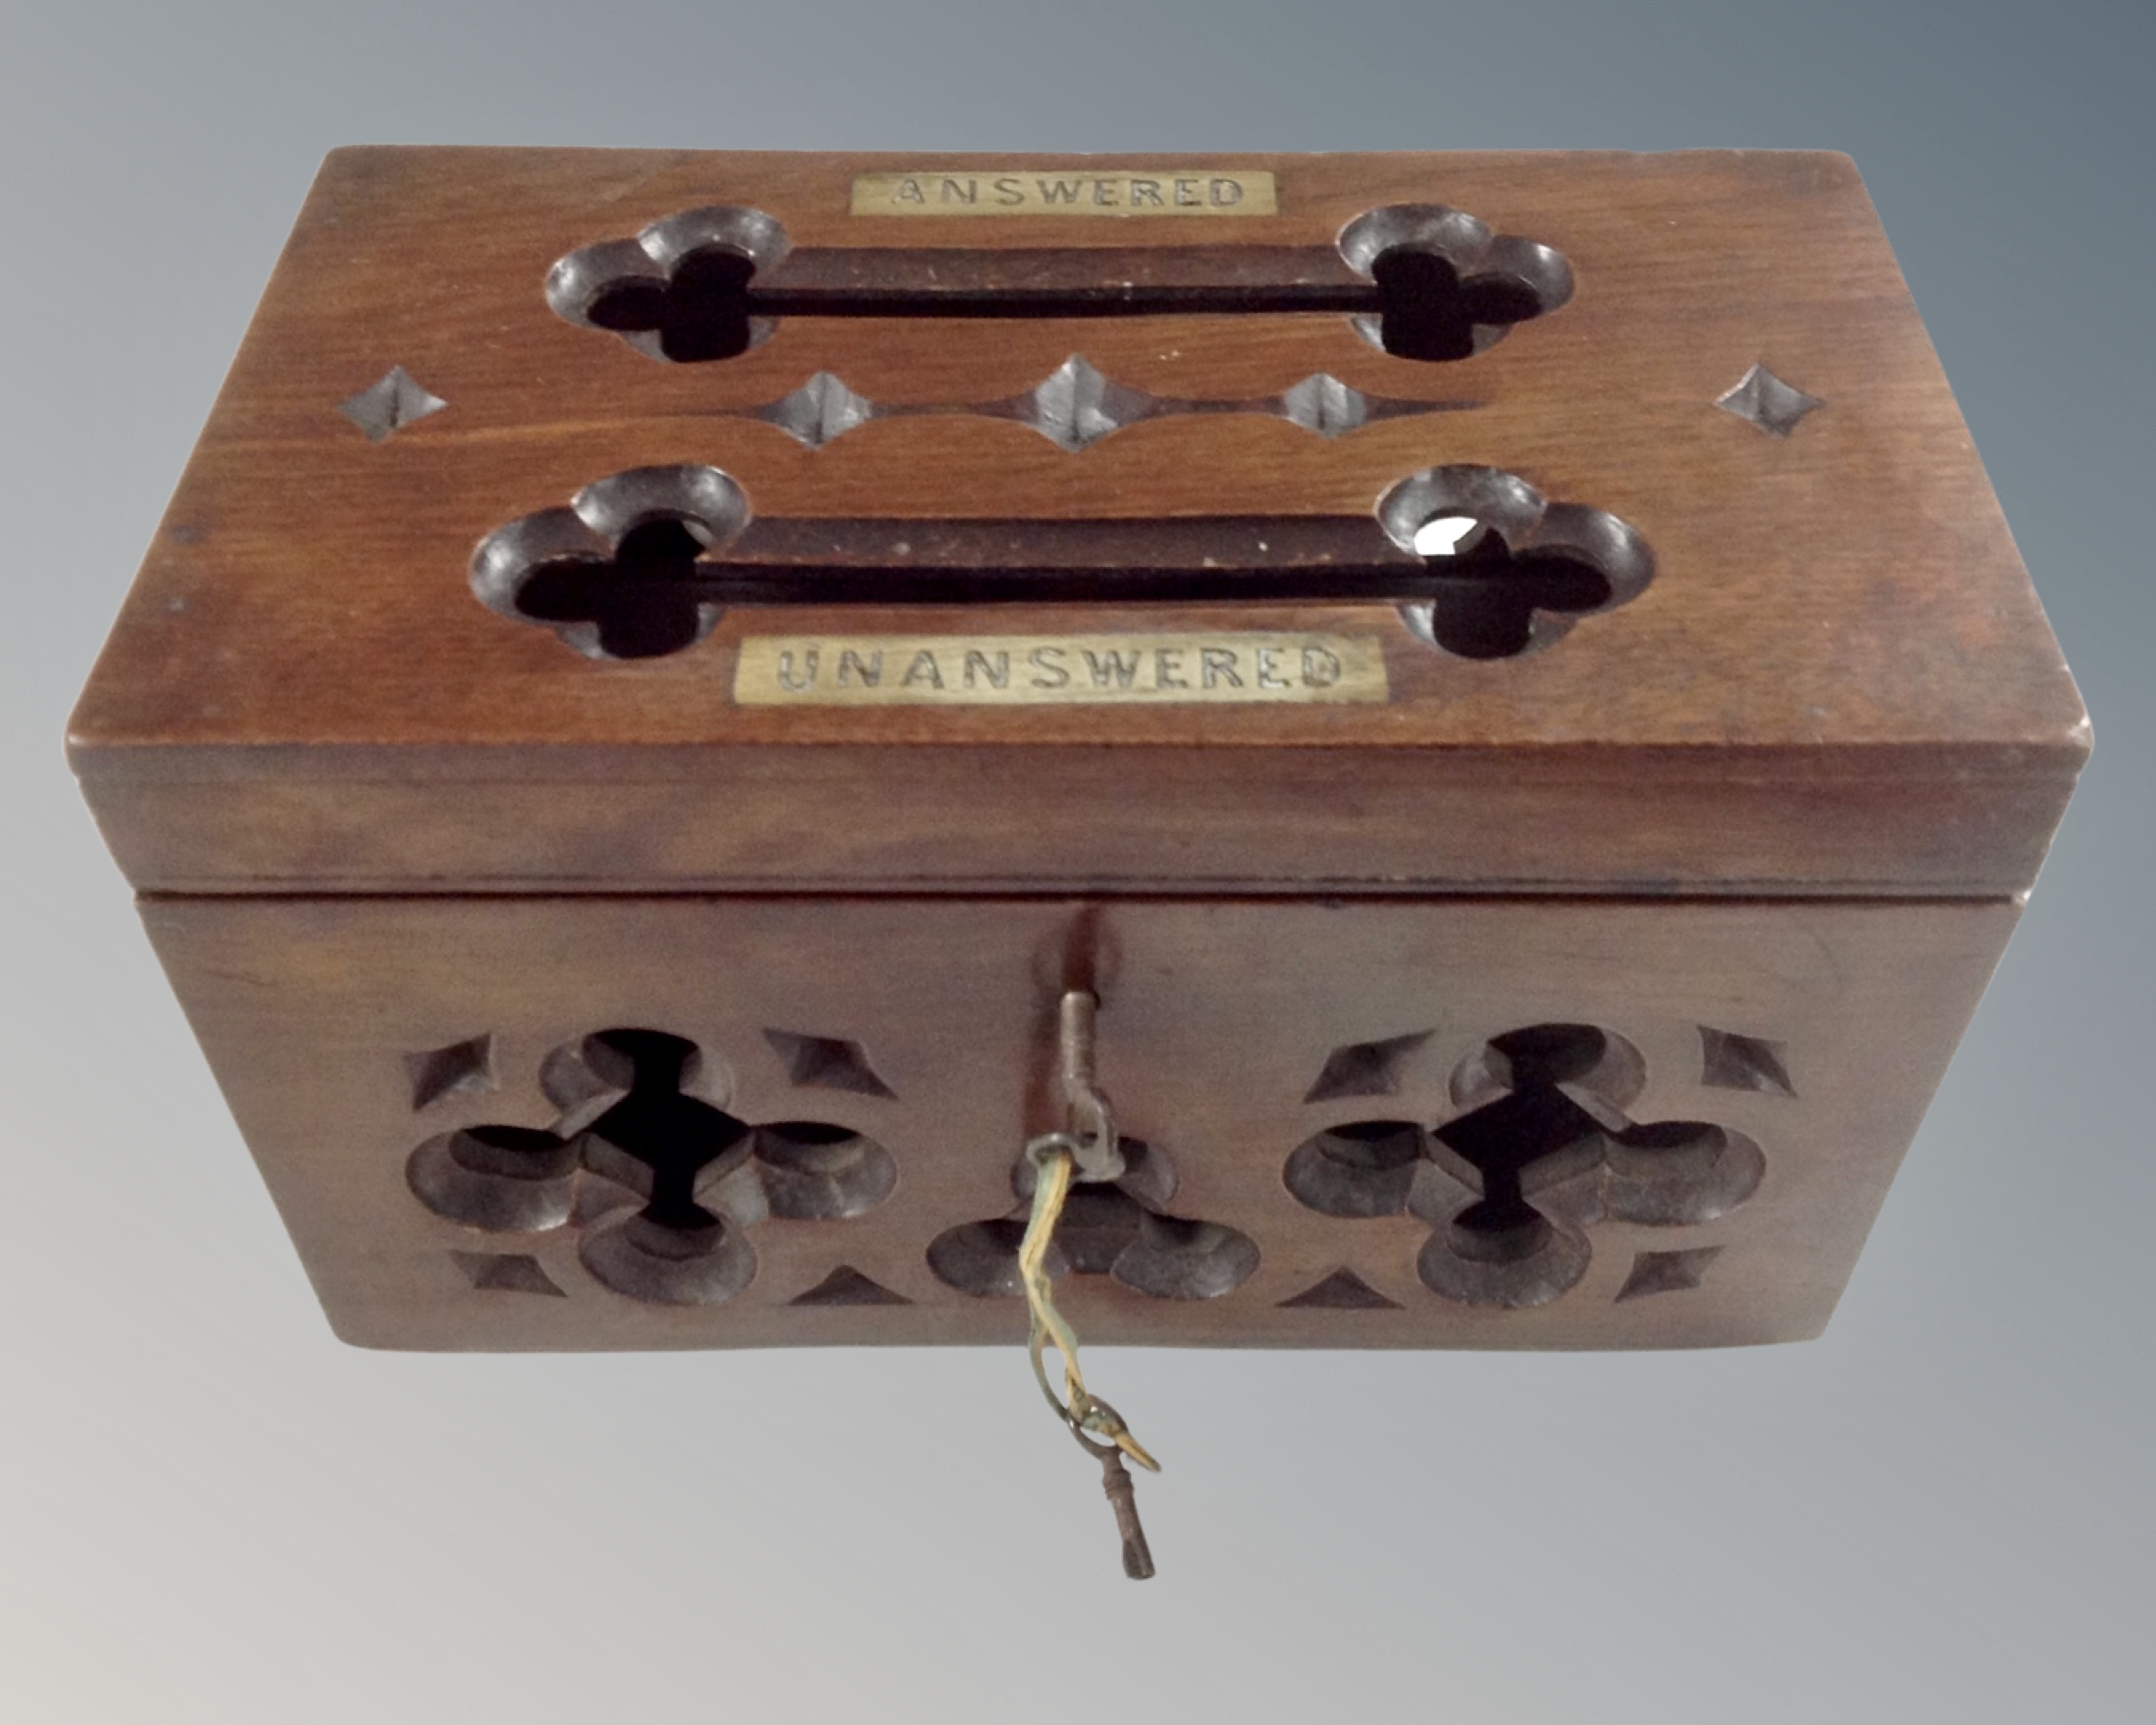 A prayer box with key